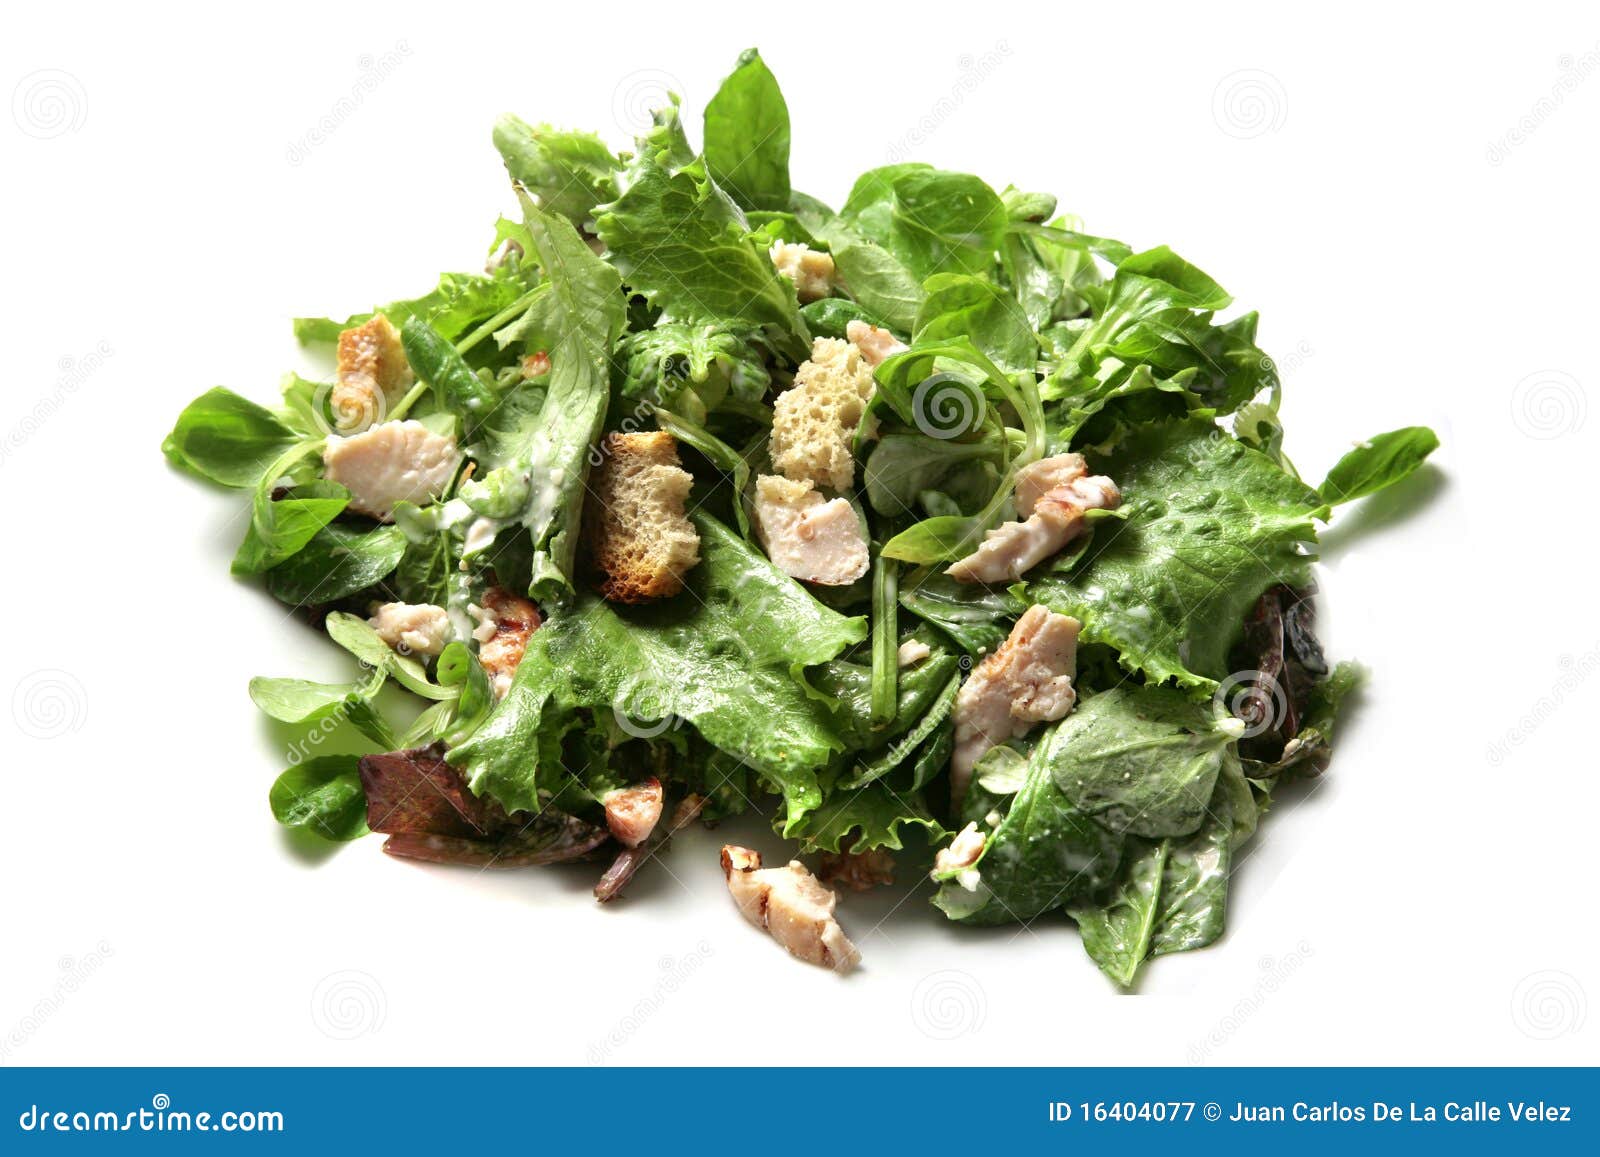 cesar salad